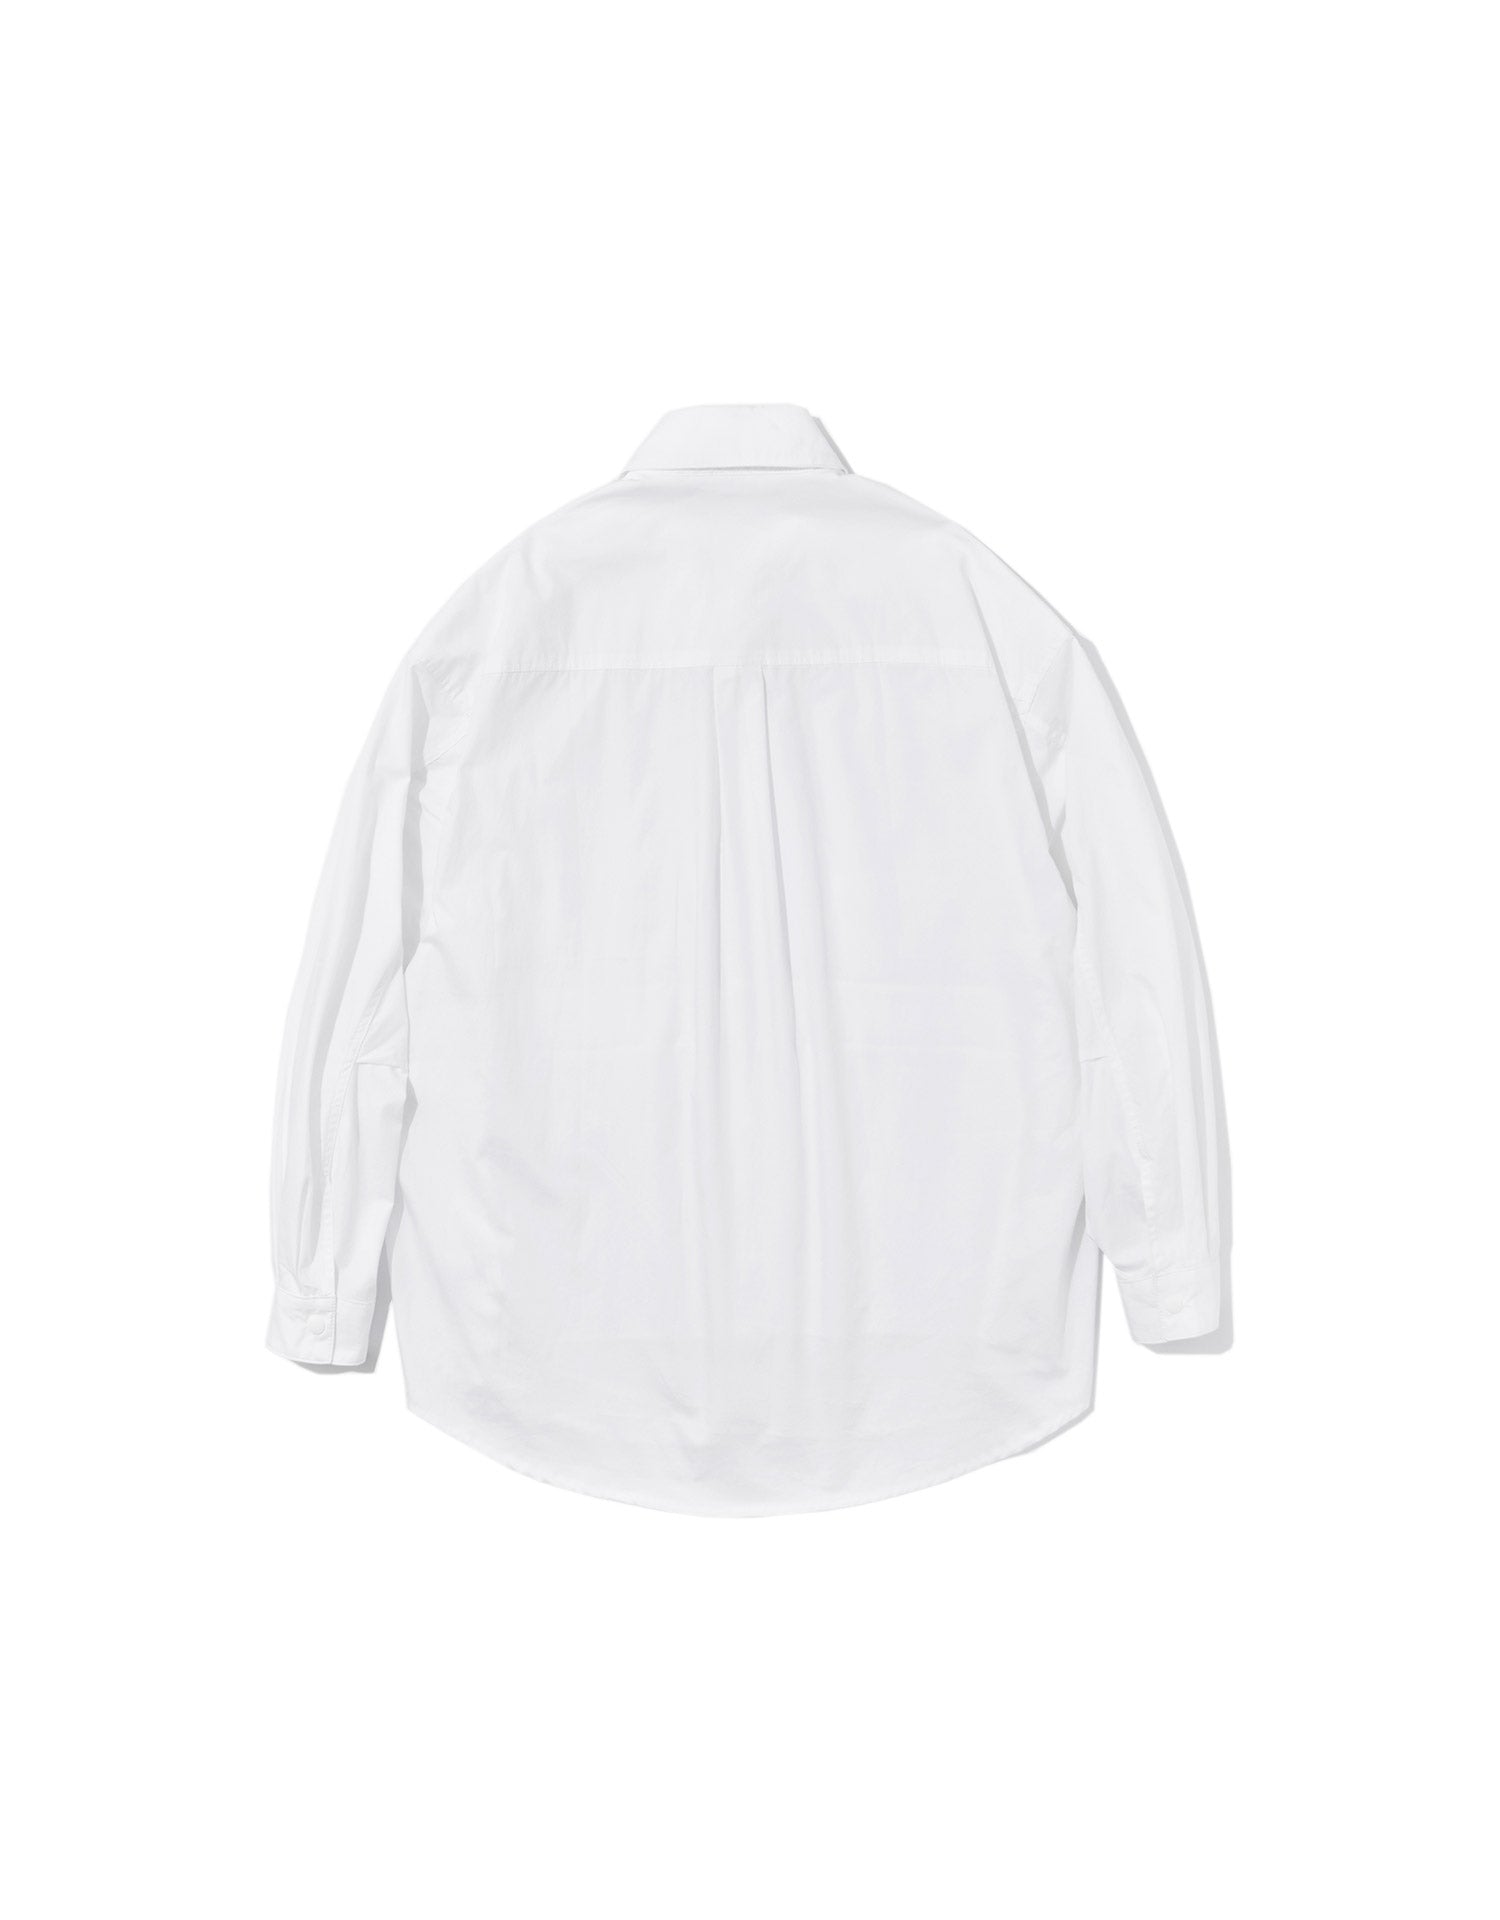 TopBasics Four Pockets Cotton Shirt